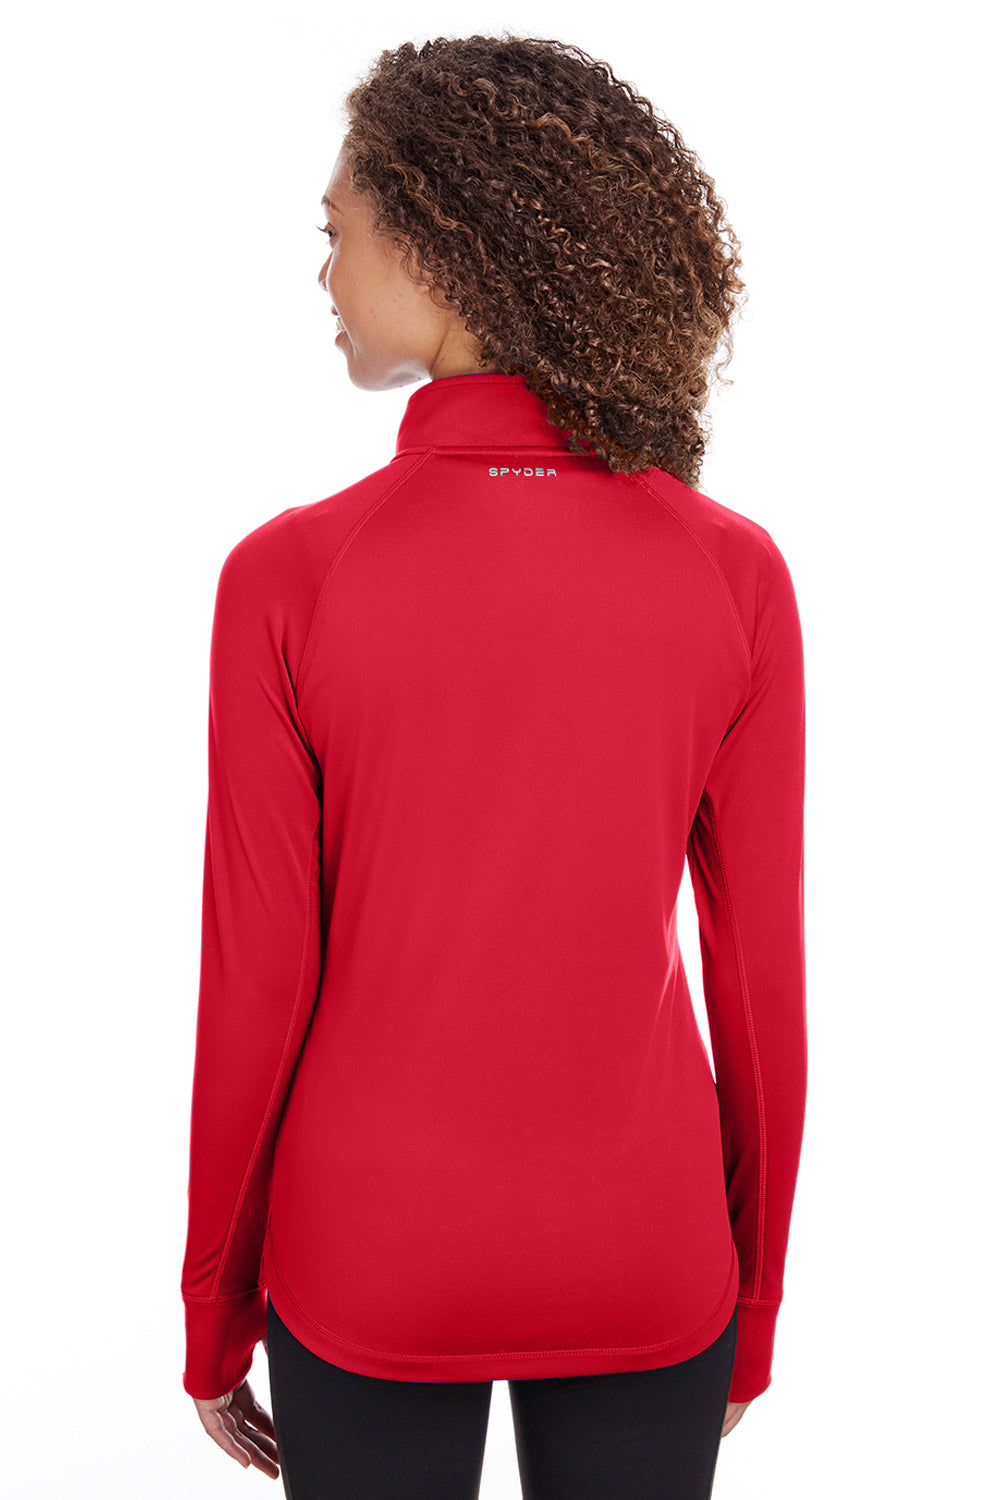 Spyder S16798 Womens Freestyle 1/4 Zip Sweatshirt Red Back